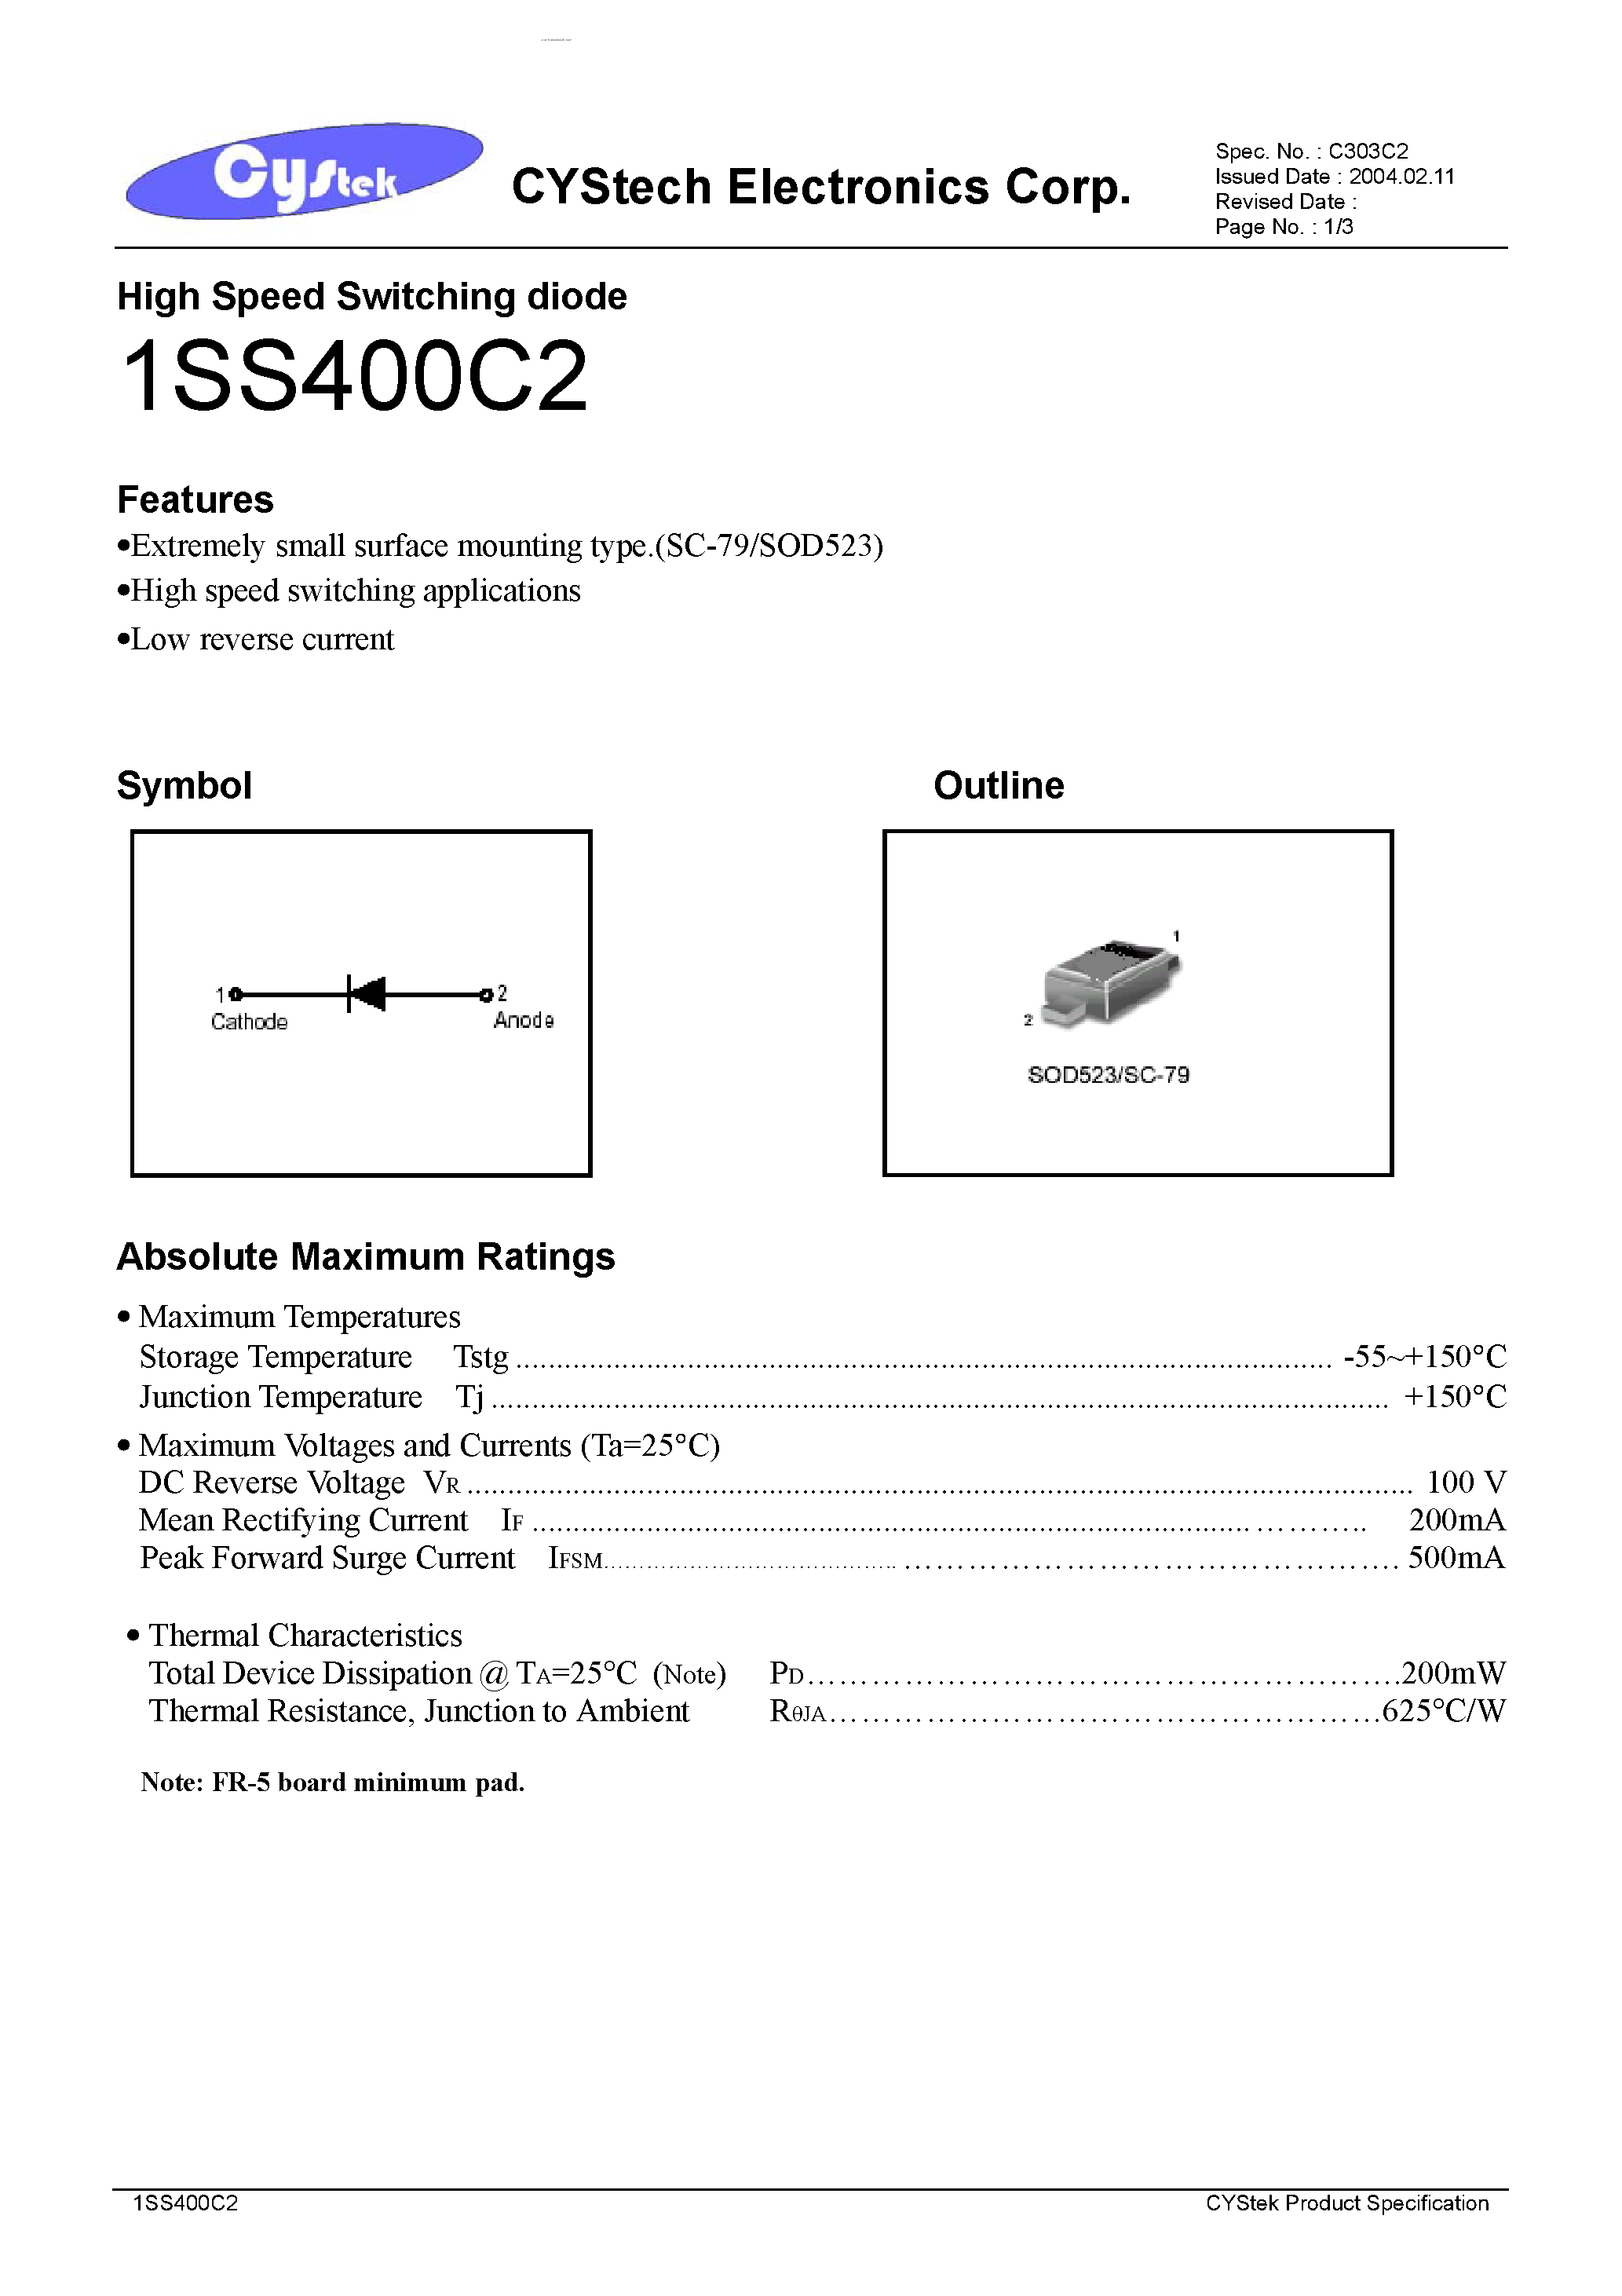 Datasheet 1SS400C2 - High Speed Switching diode page 1